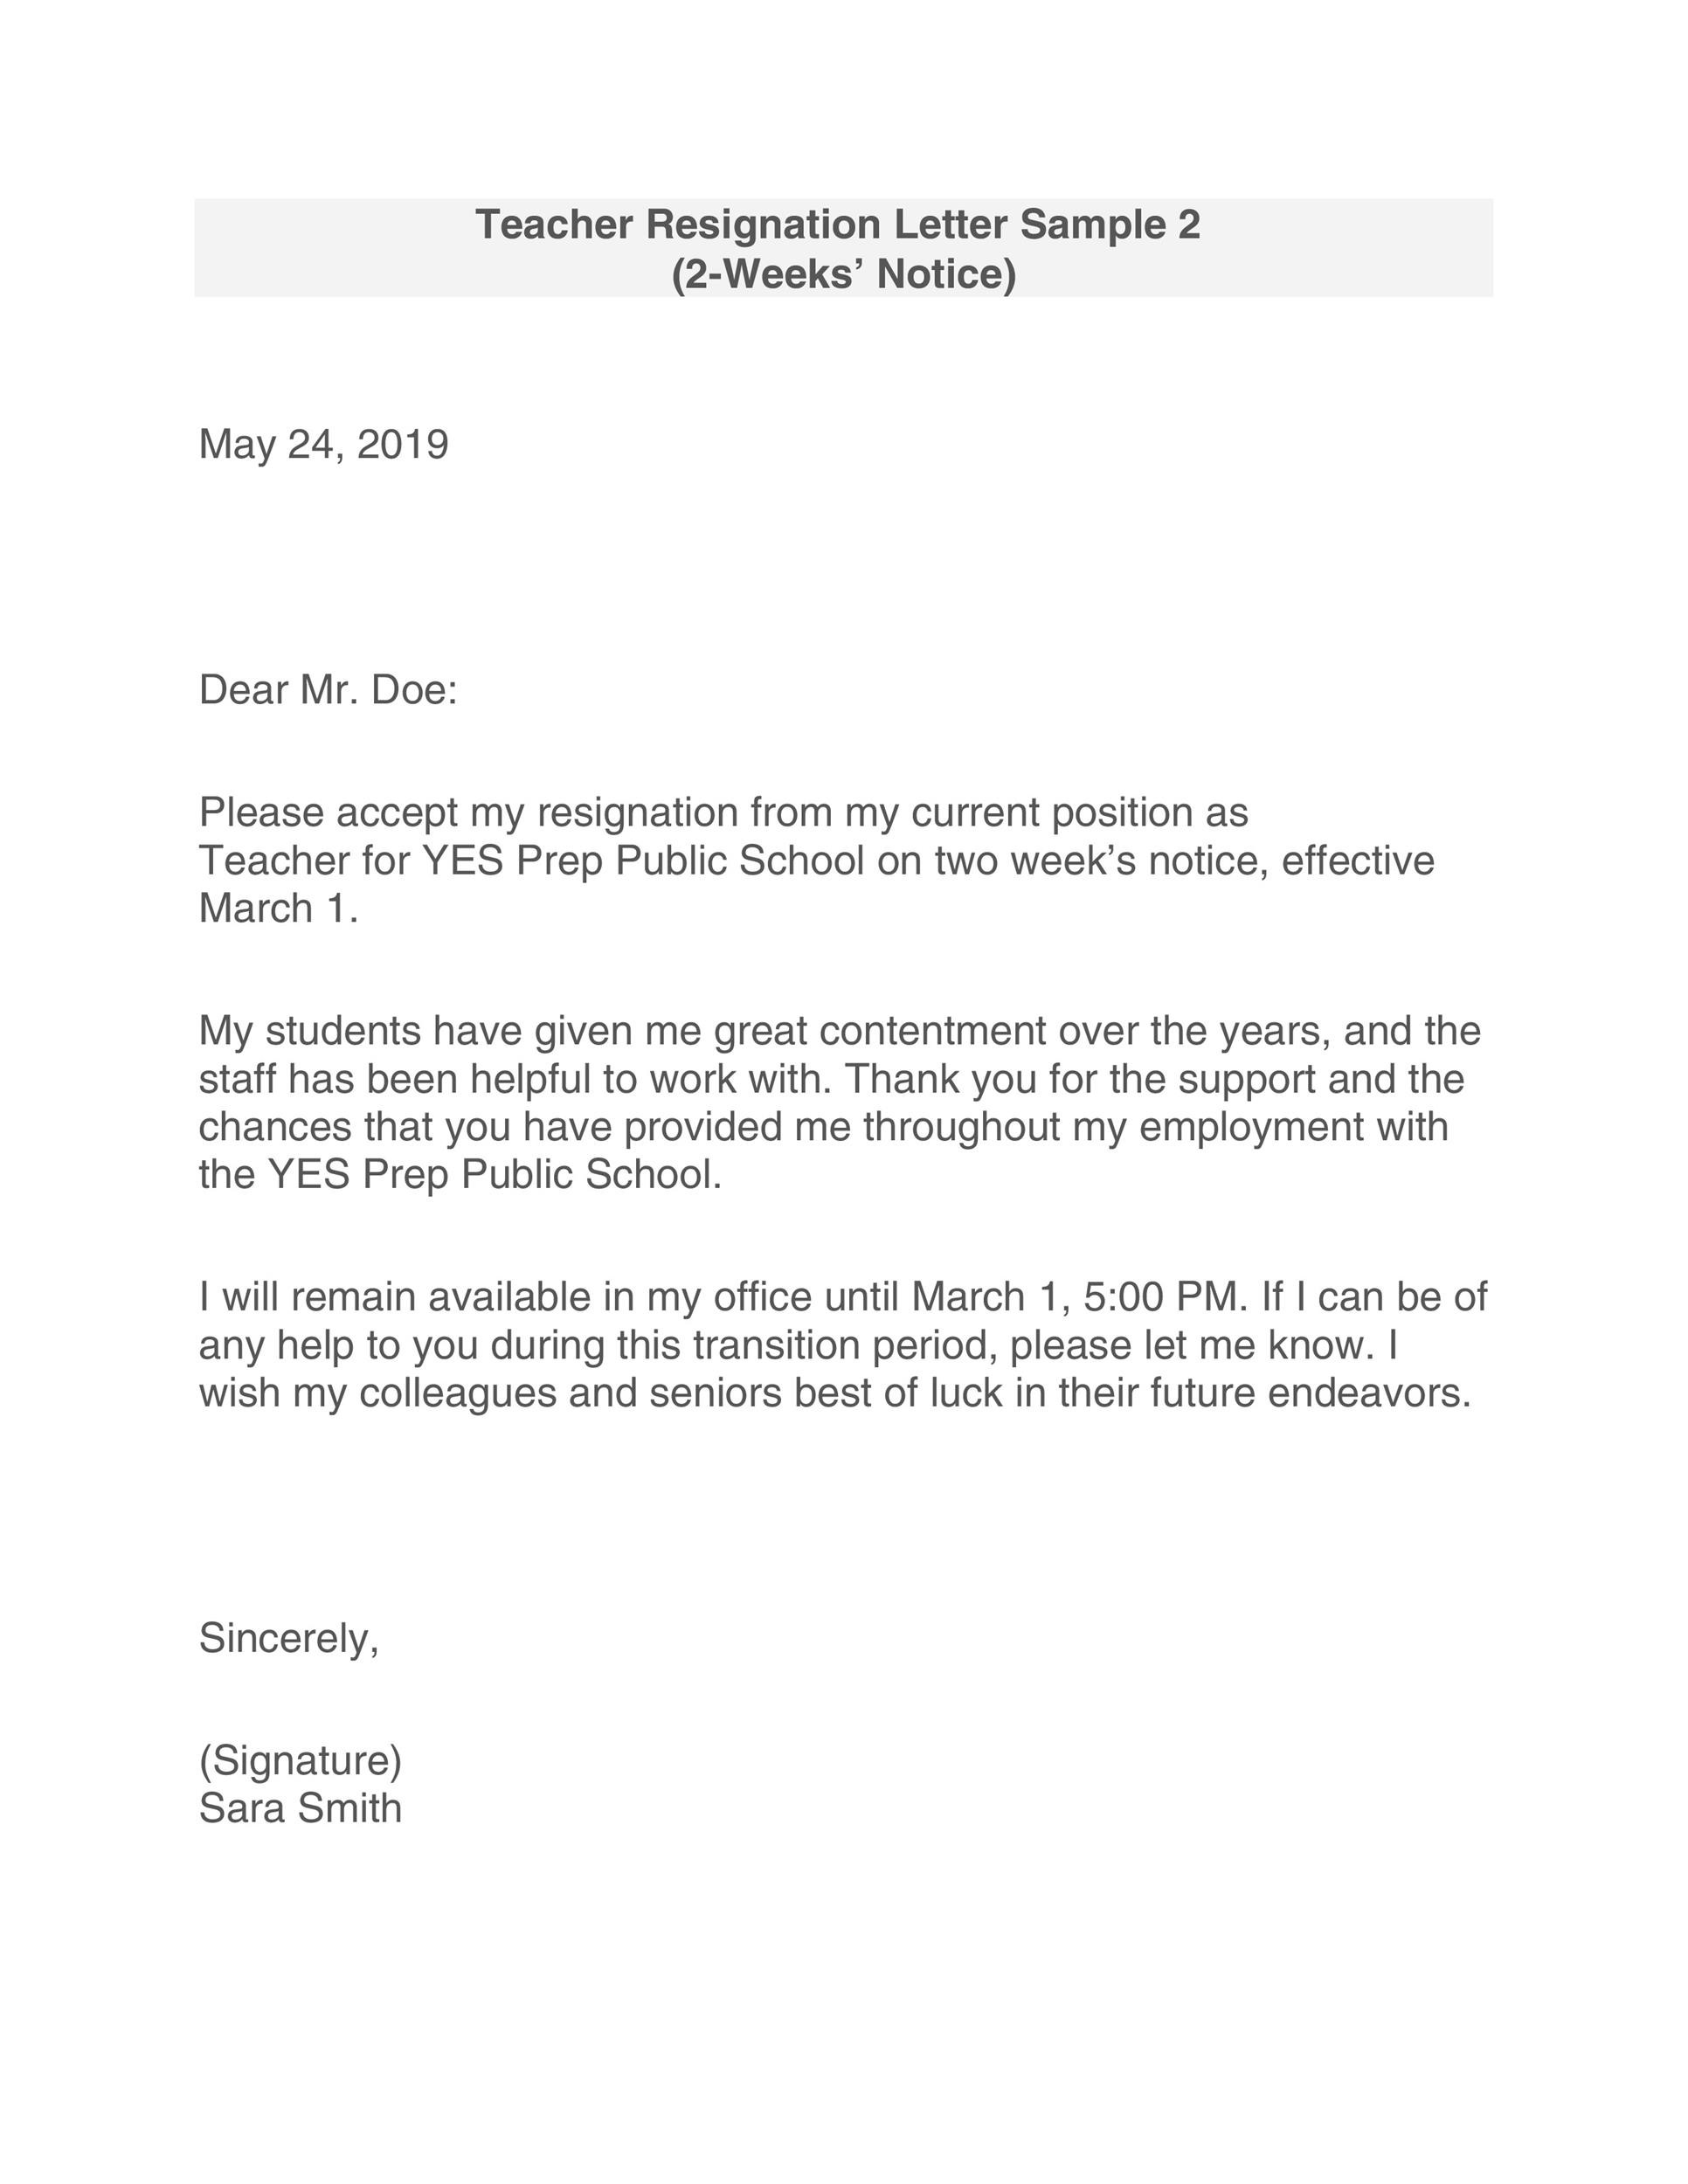 carta de renuncia de profesor gratis 26